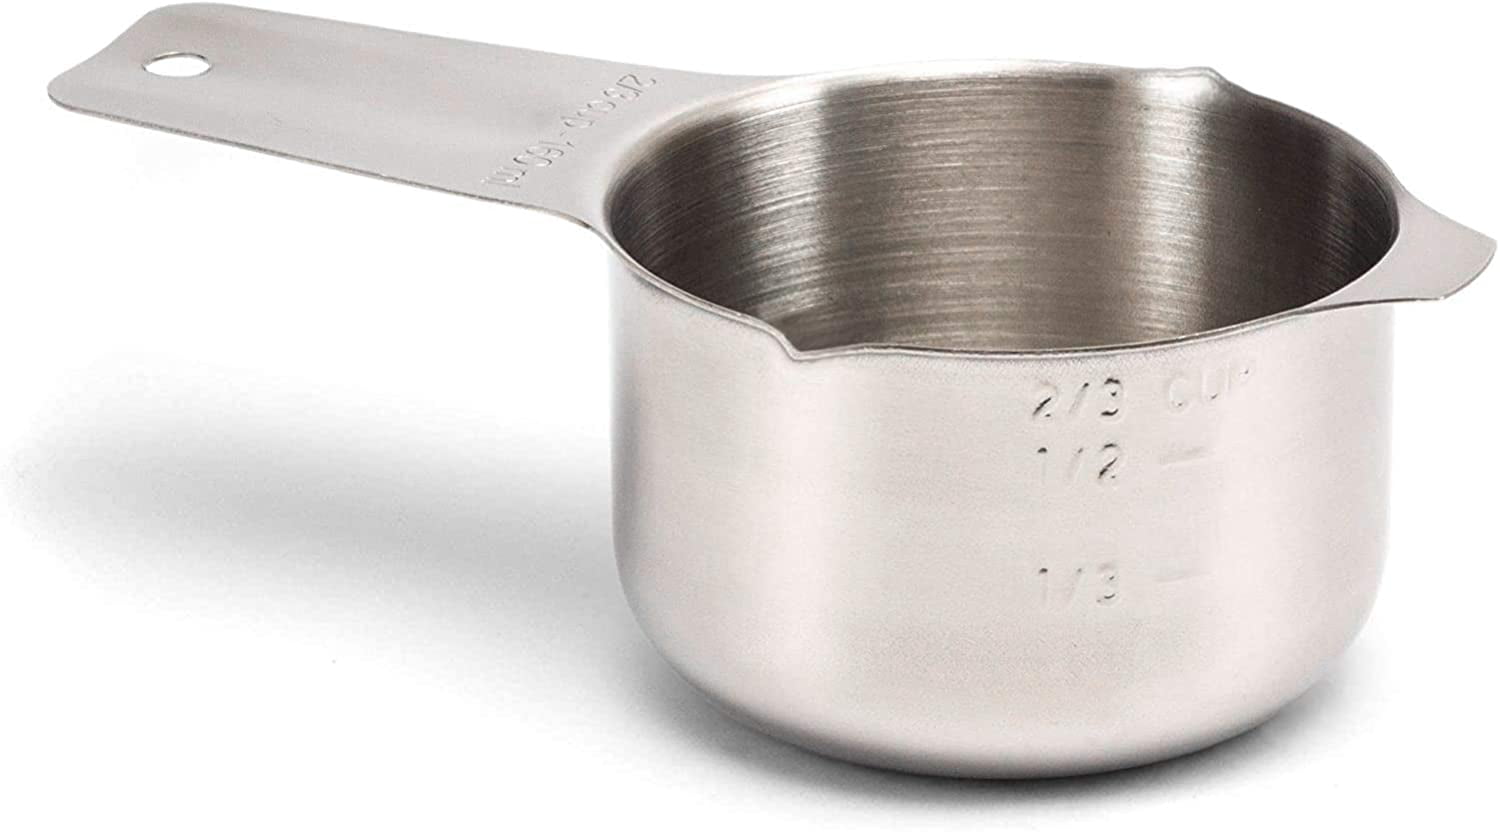 2/3 Cup Measuring Cup Stainless Steel Metal, Accurate, Engraved Markings Us  